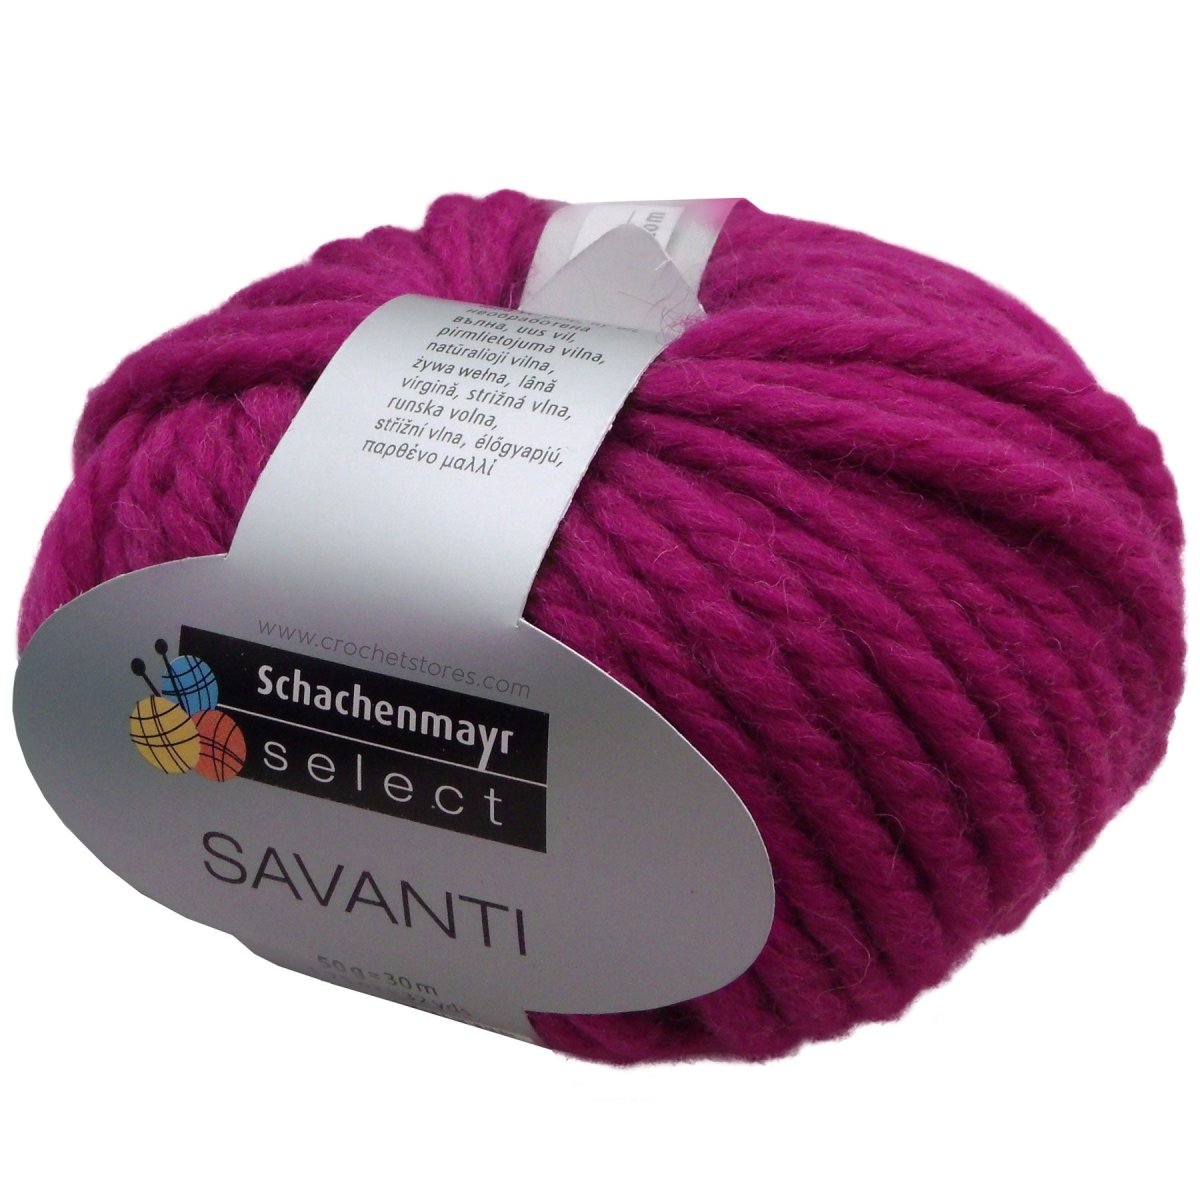 SAVANTI - Crochetstores9811771-47454053859043601